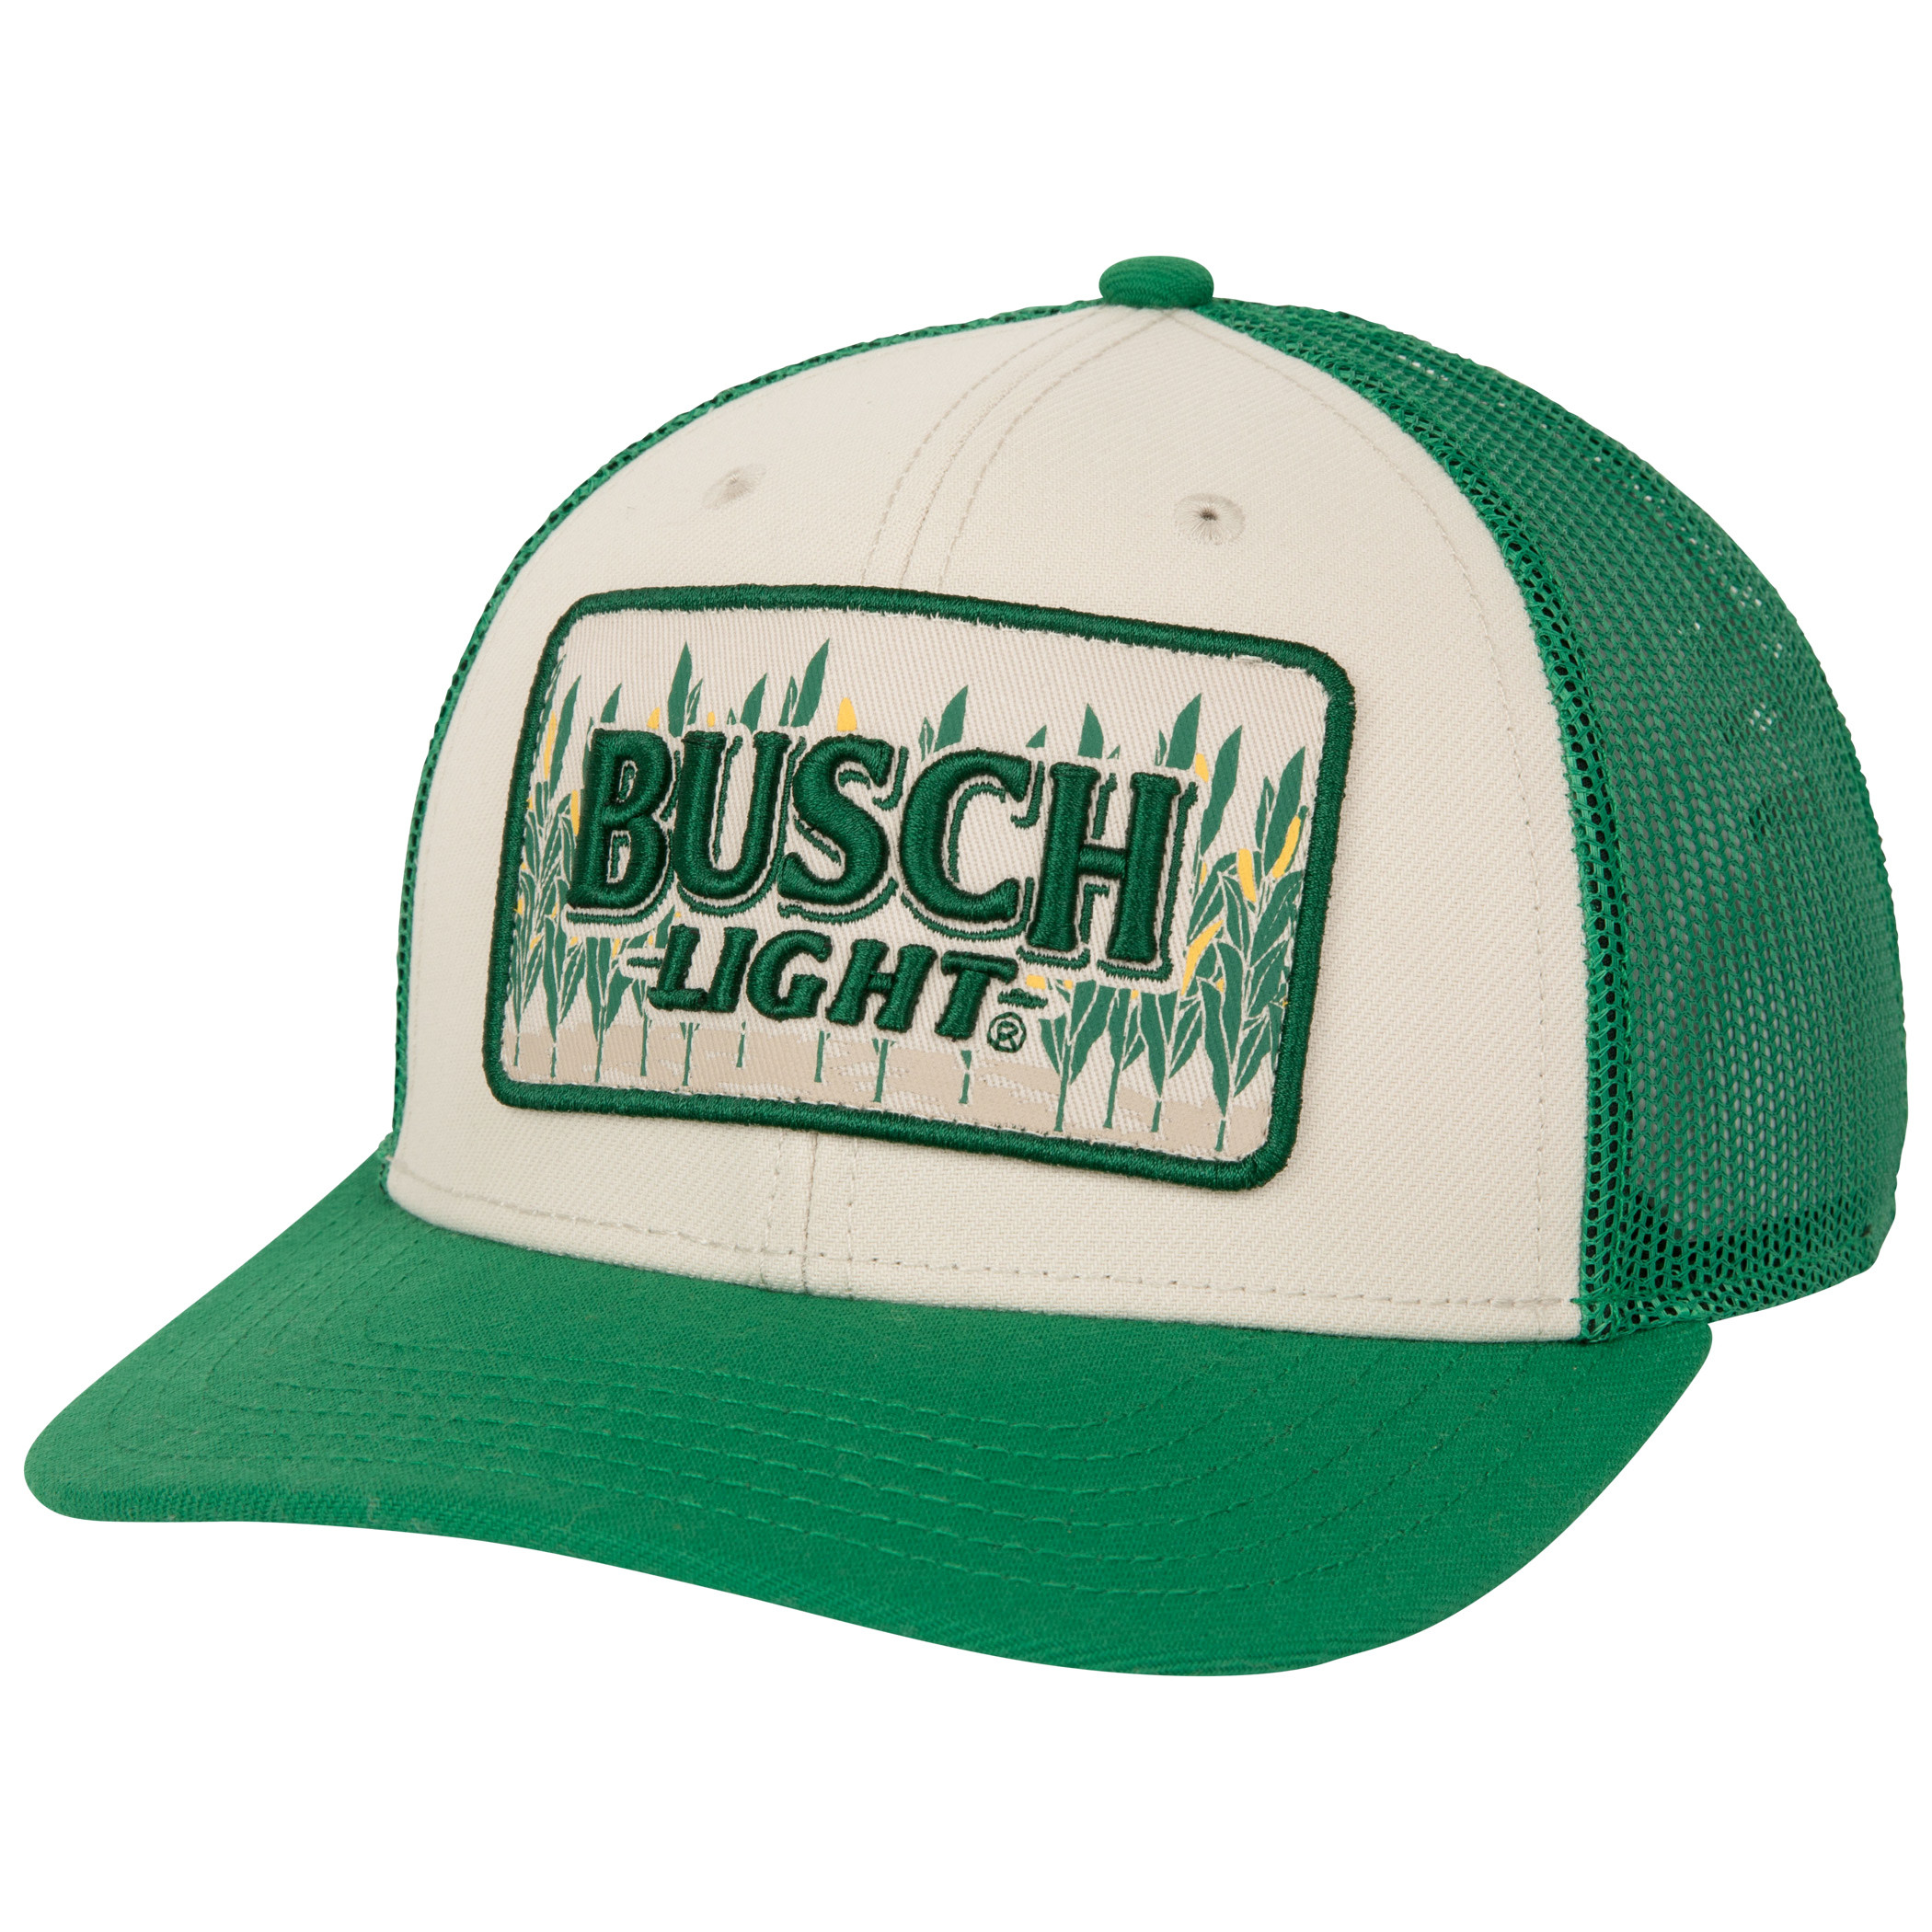 Busch for The Farmers Trucker Hat Green